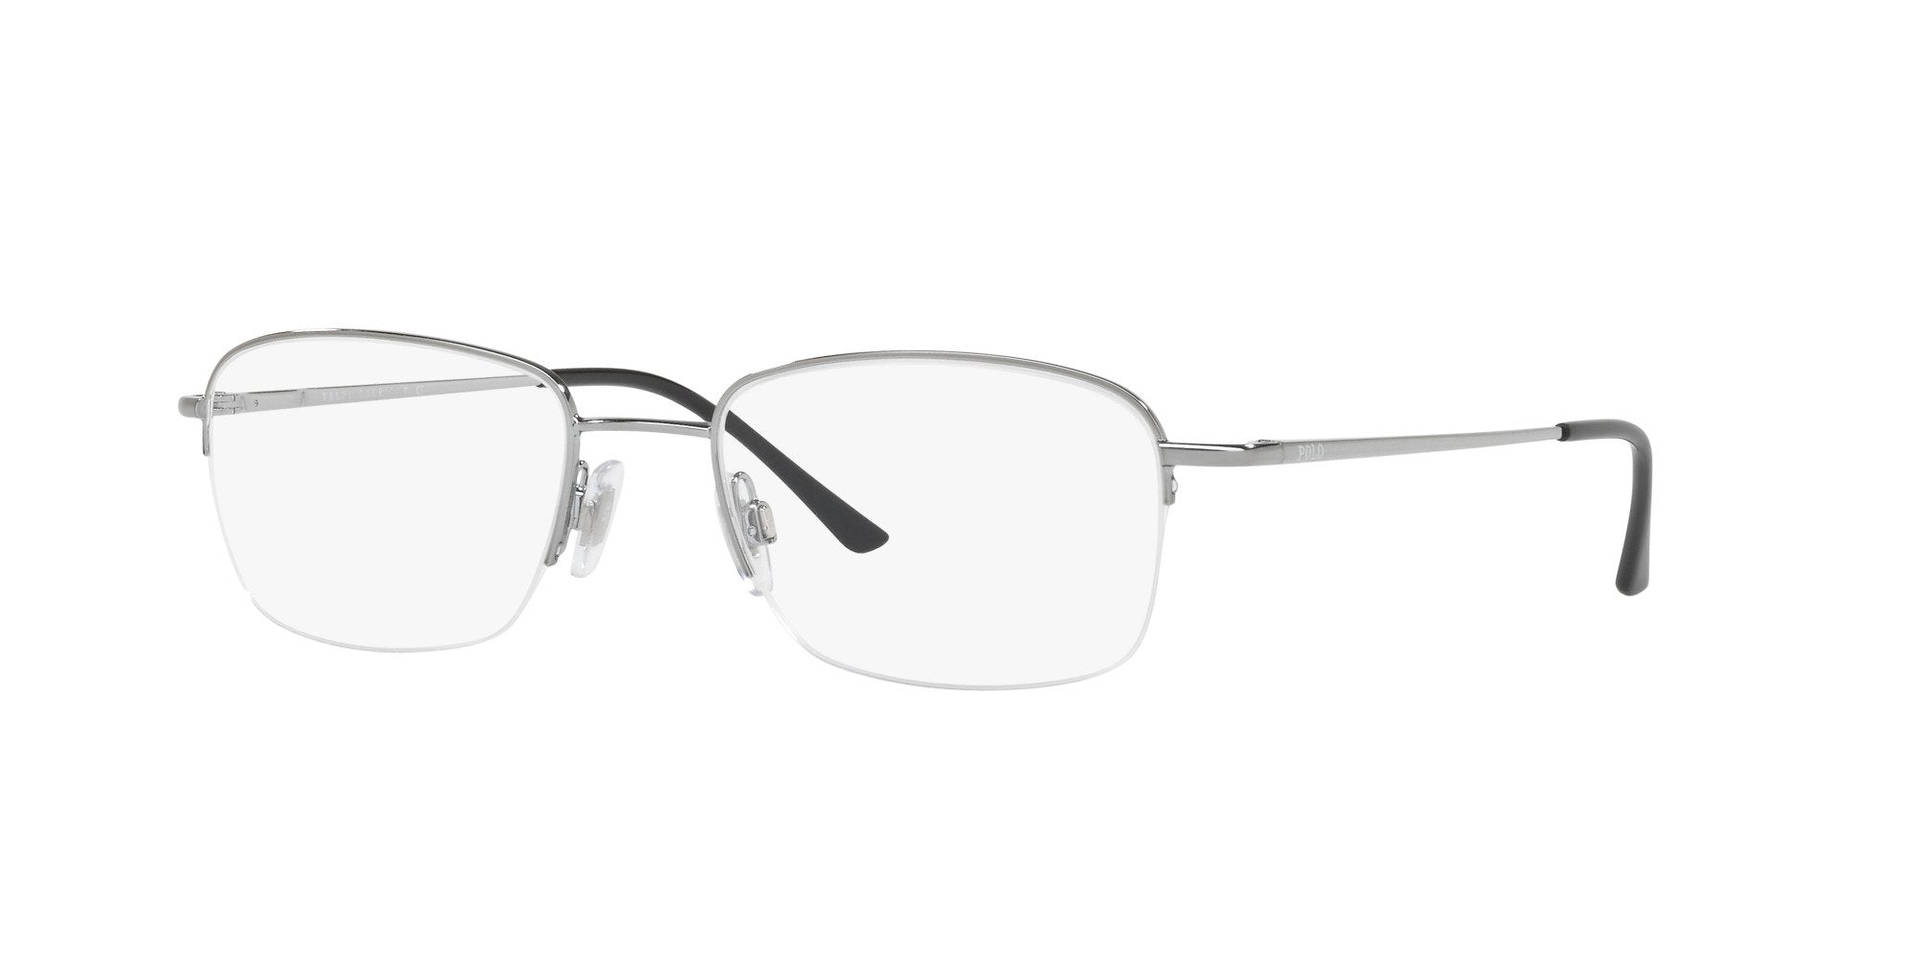 Classy Polo Eyeglasses - a Fusion of Luxury&Sportivism Wallpaper